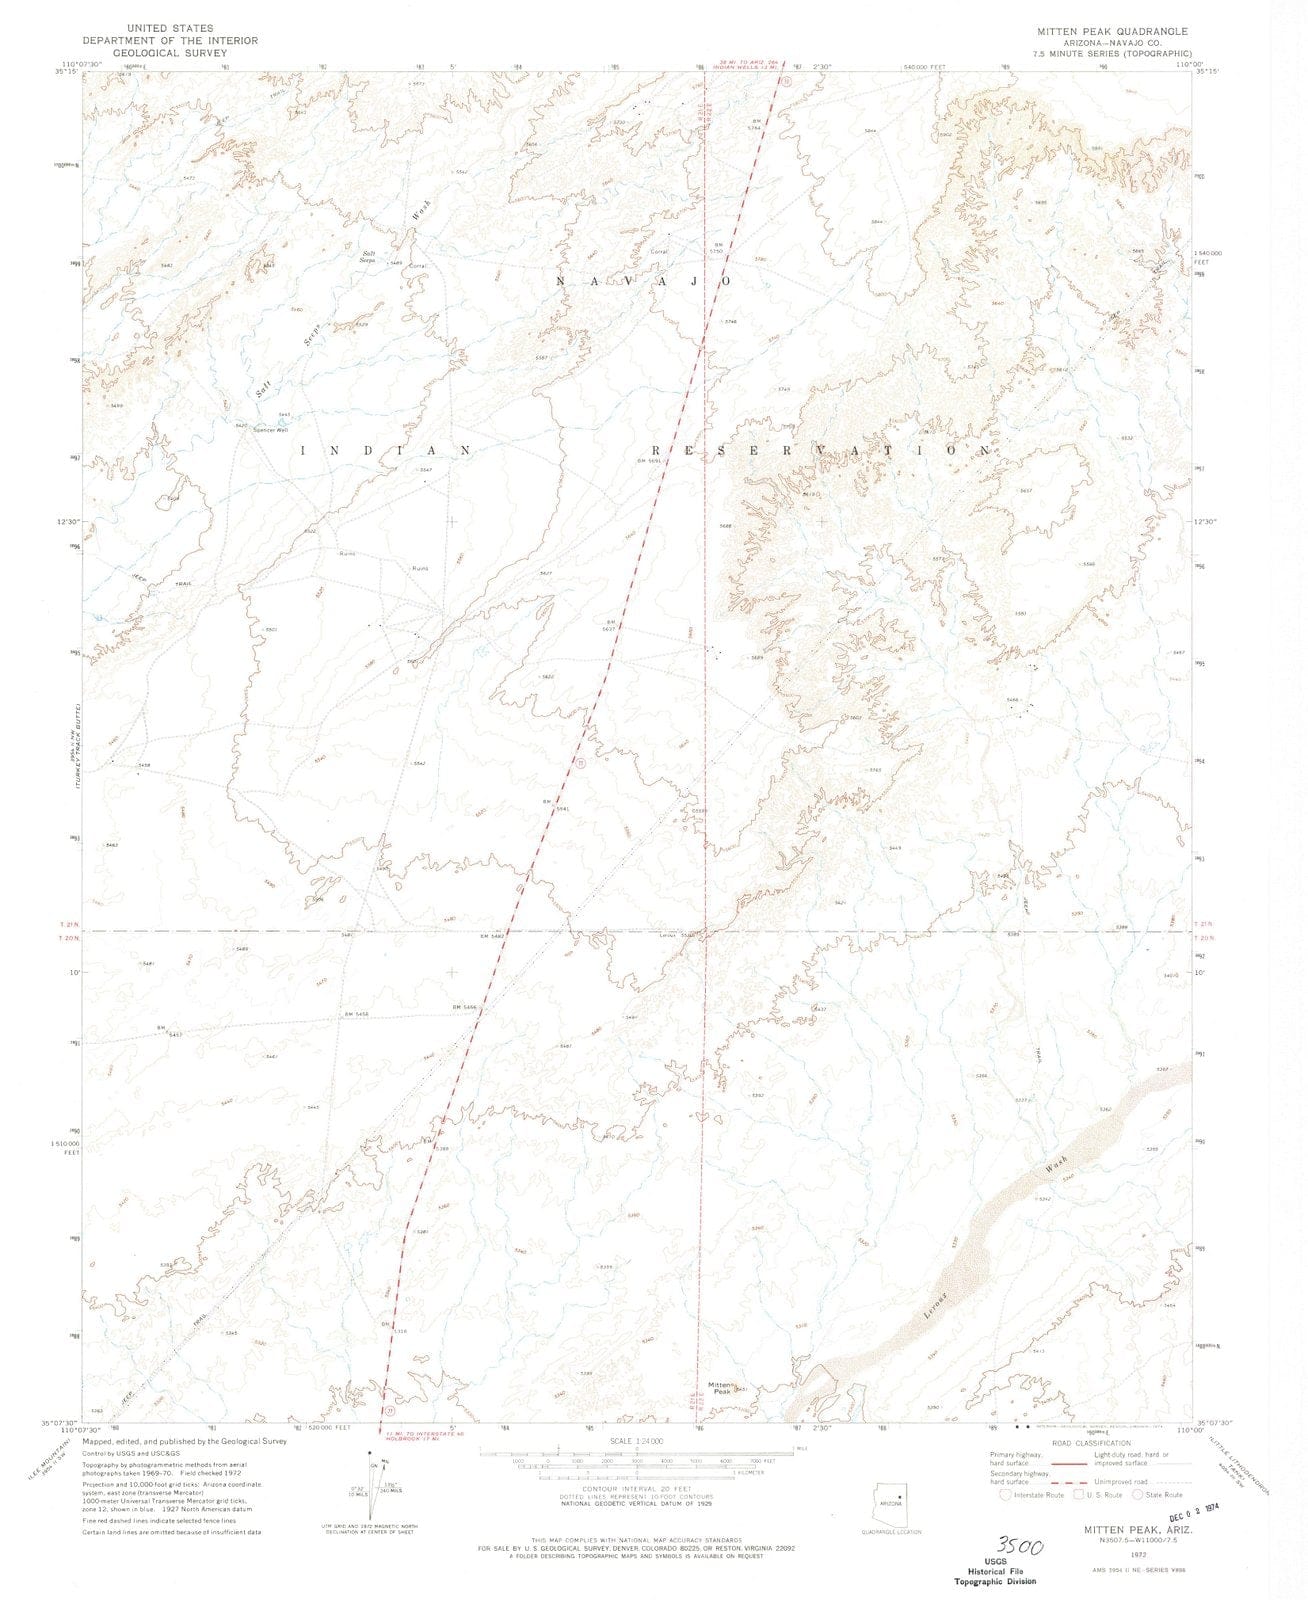 1972 Mitten Peak, AZ - Arizona - USGS Topographic Map